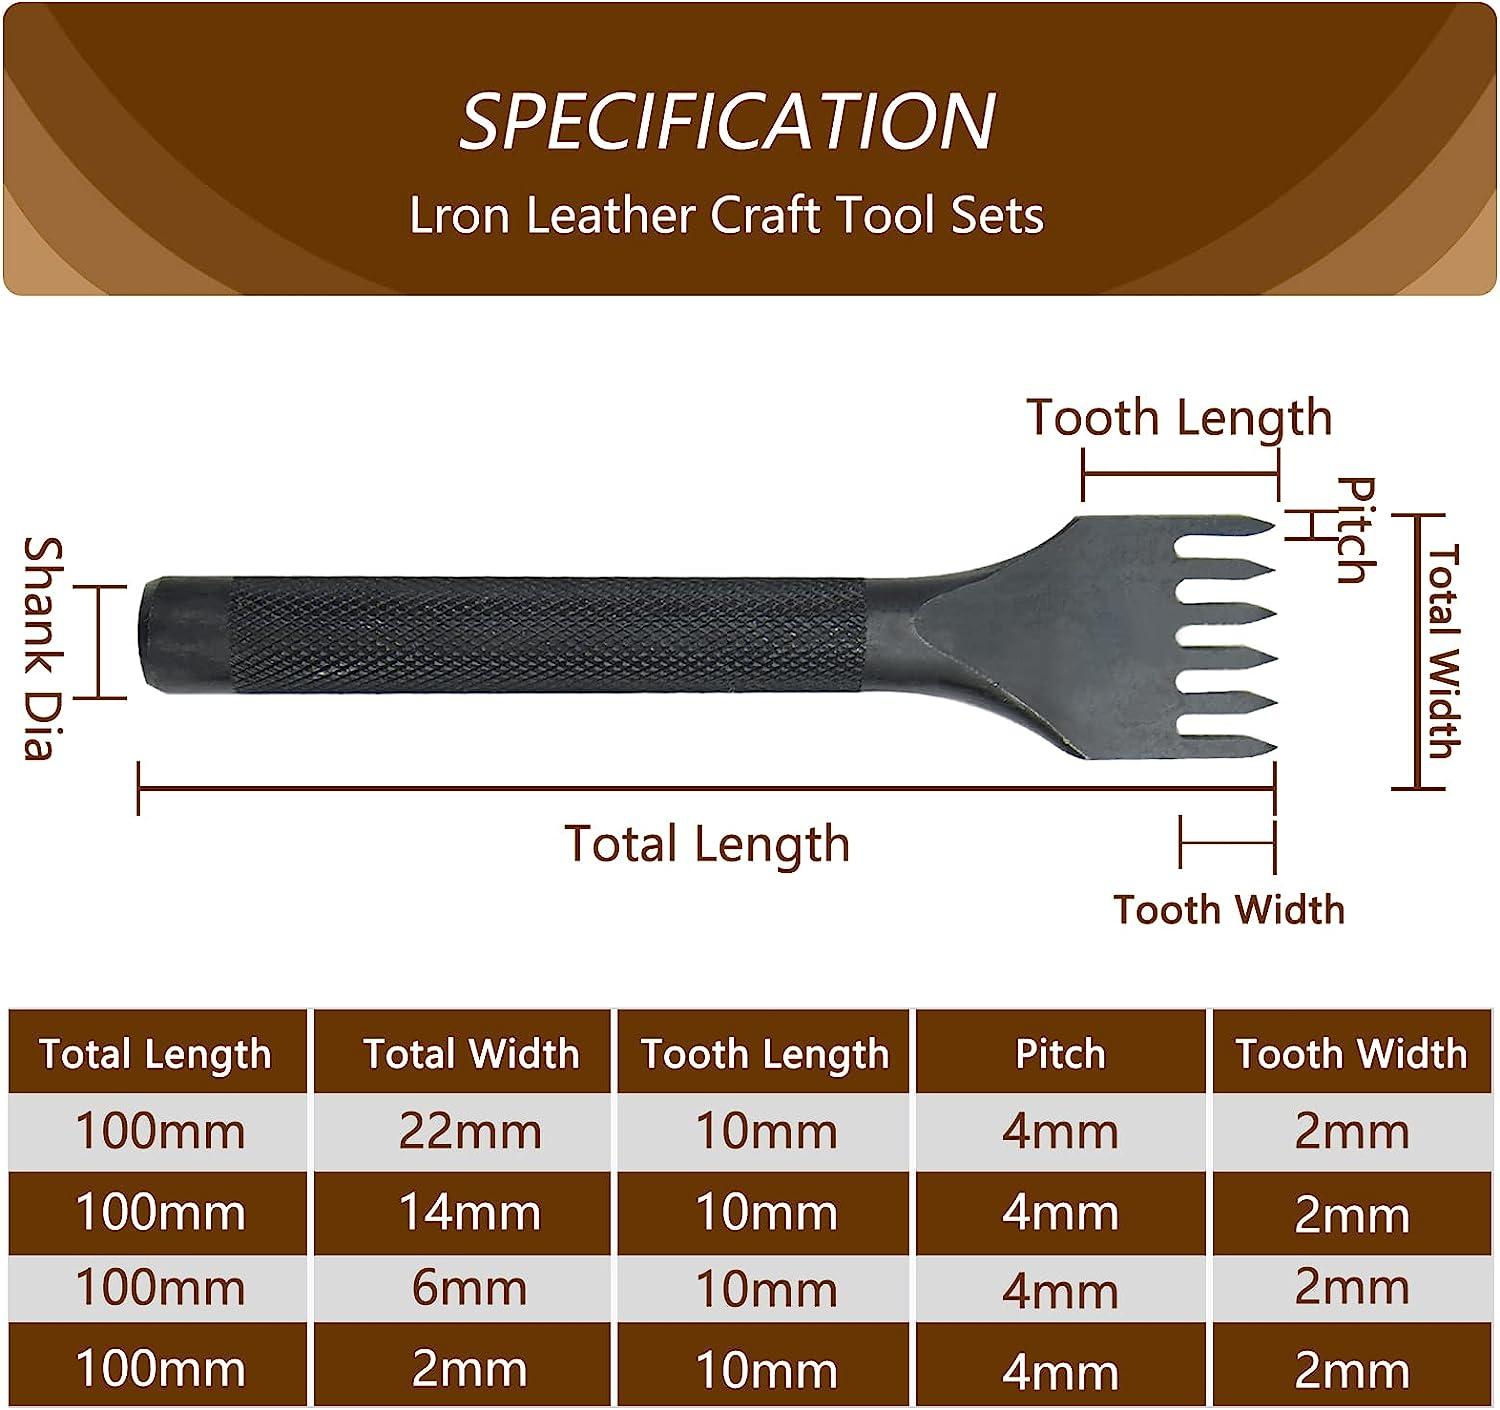 Professional Leather Craft Tools Kit